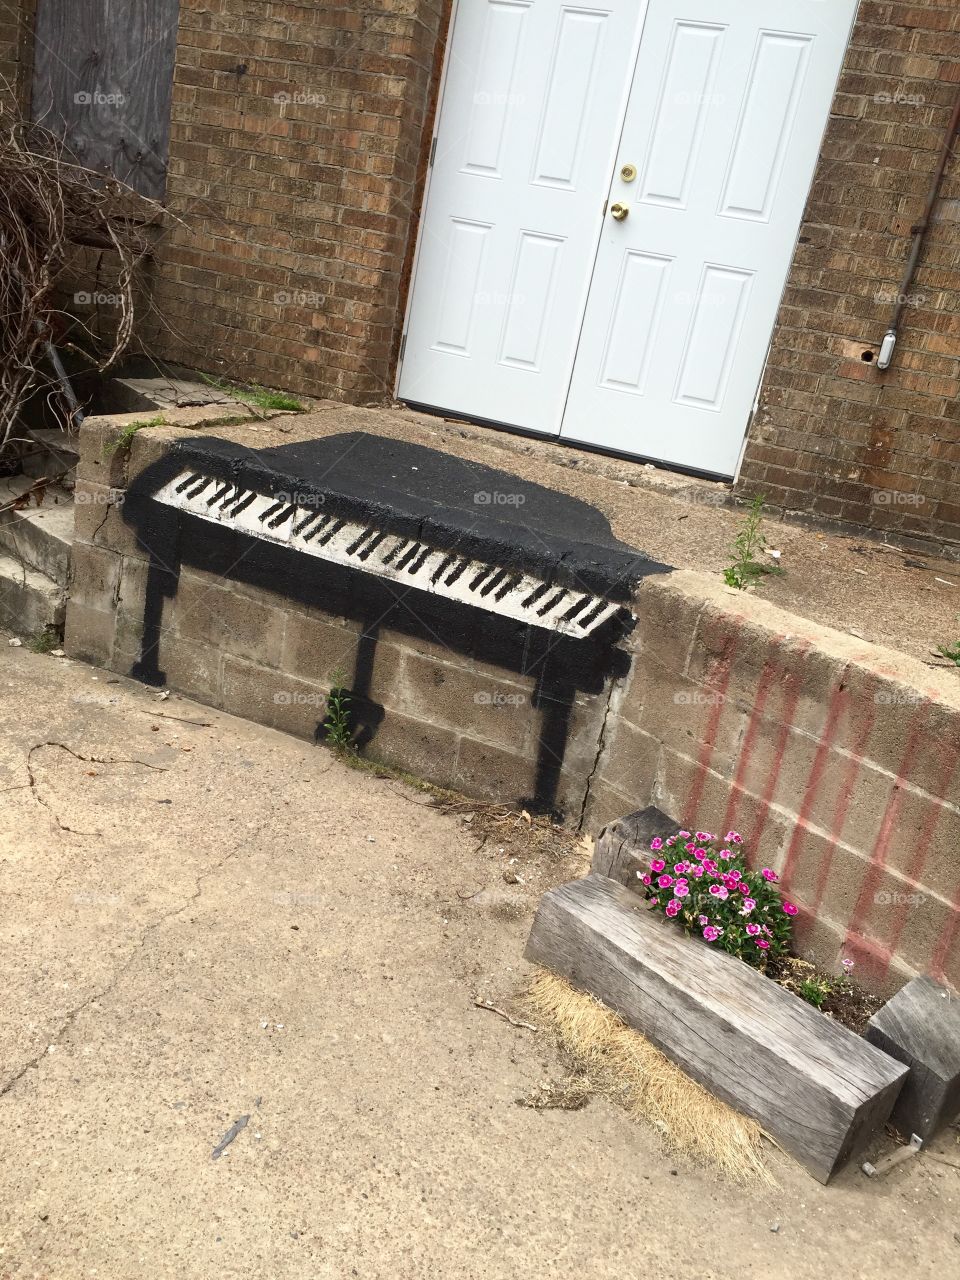 Street art piano